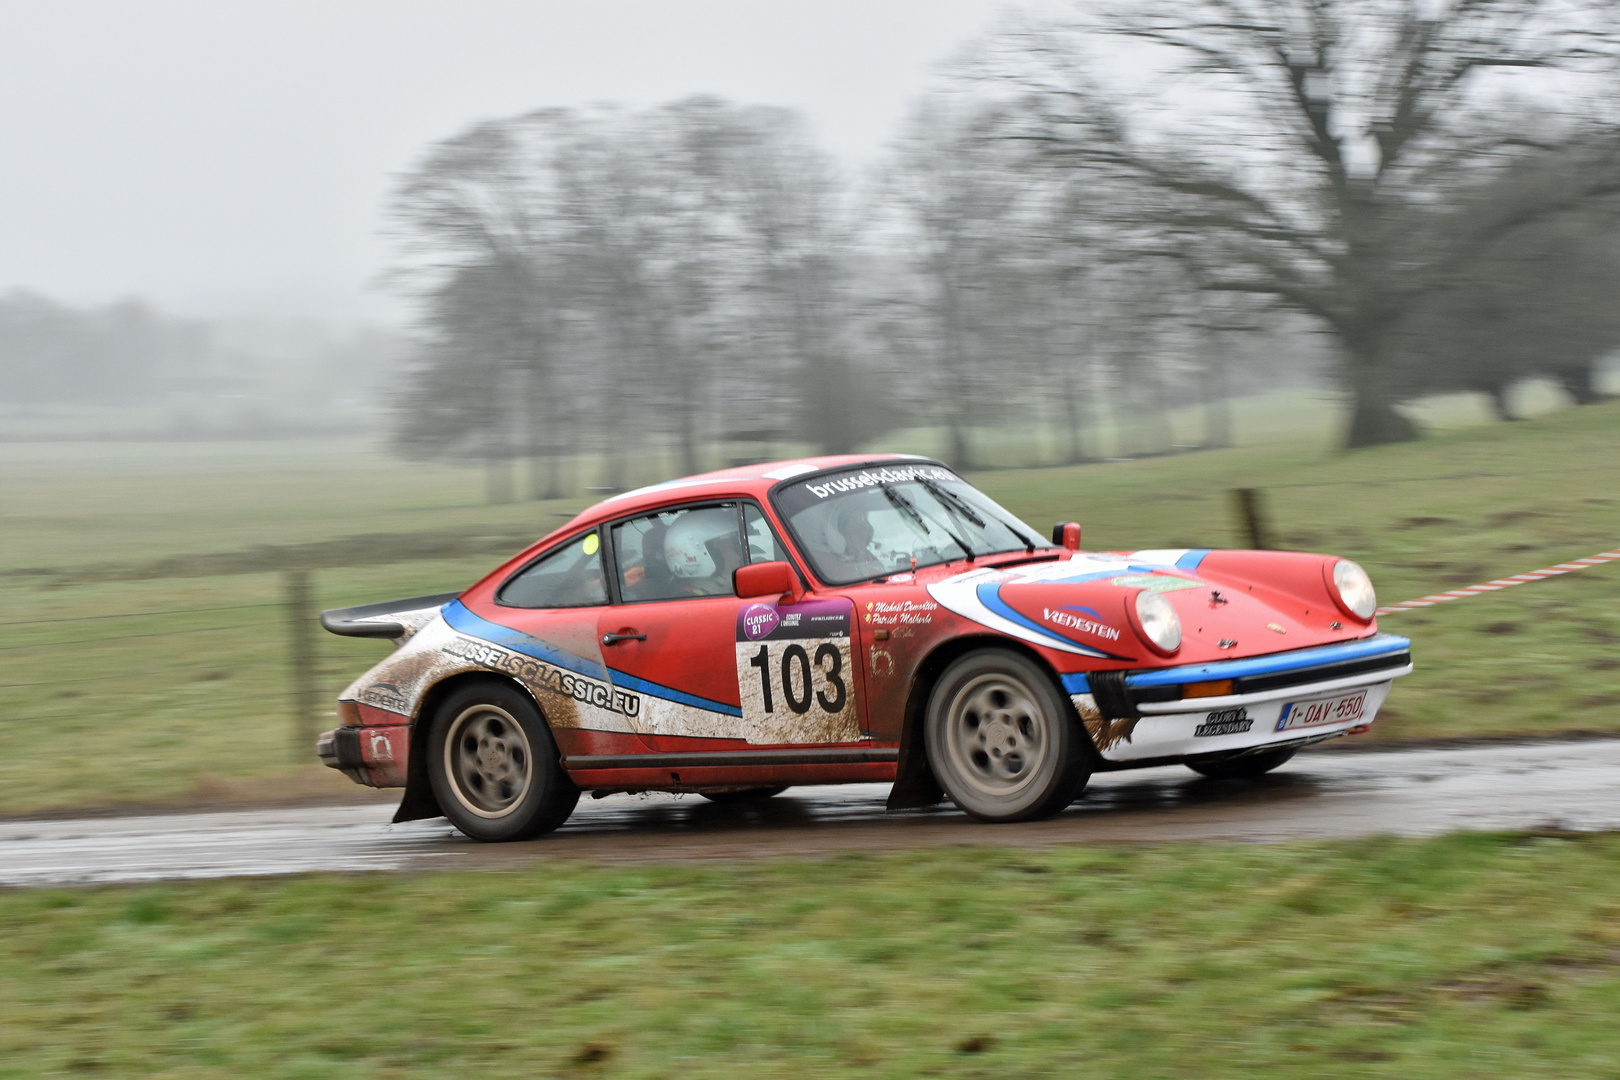 Rallye-Porsche Part I